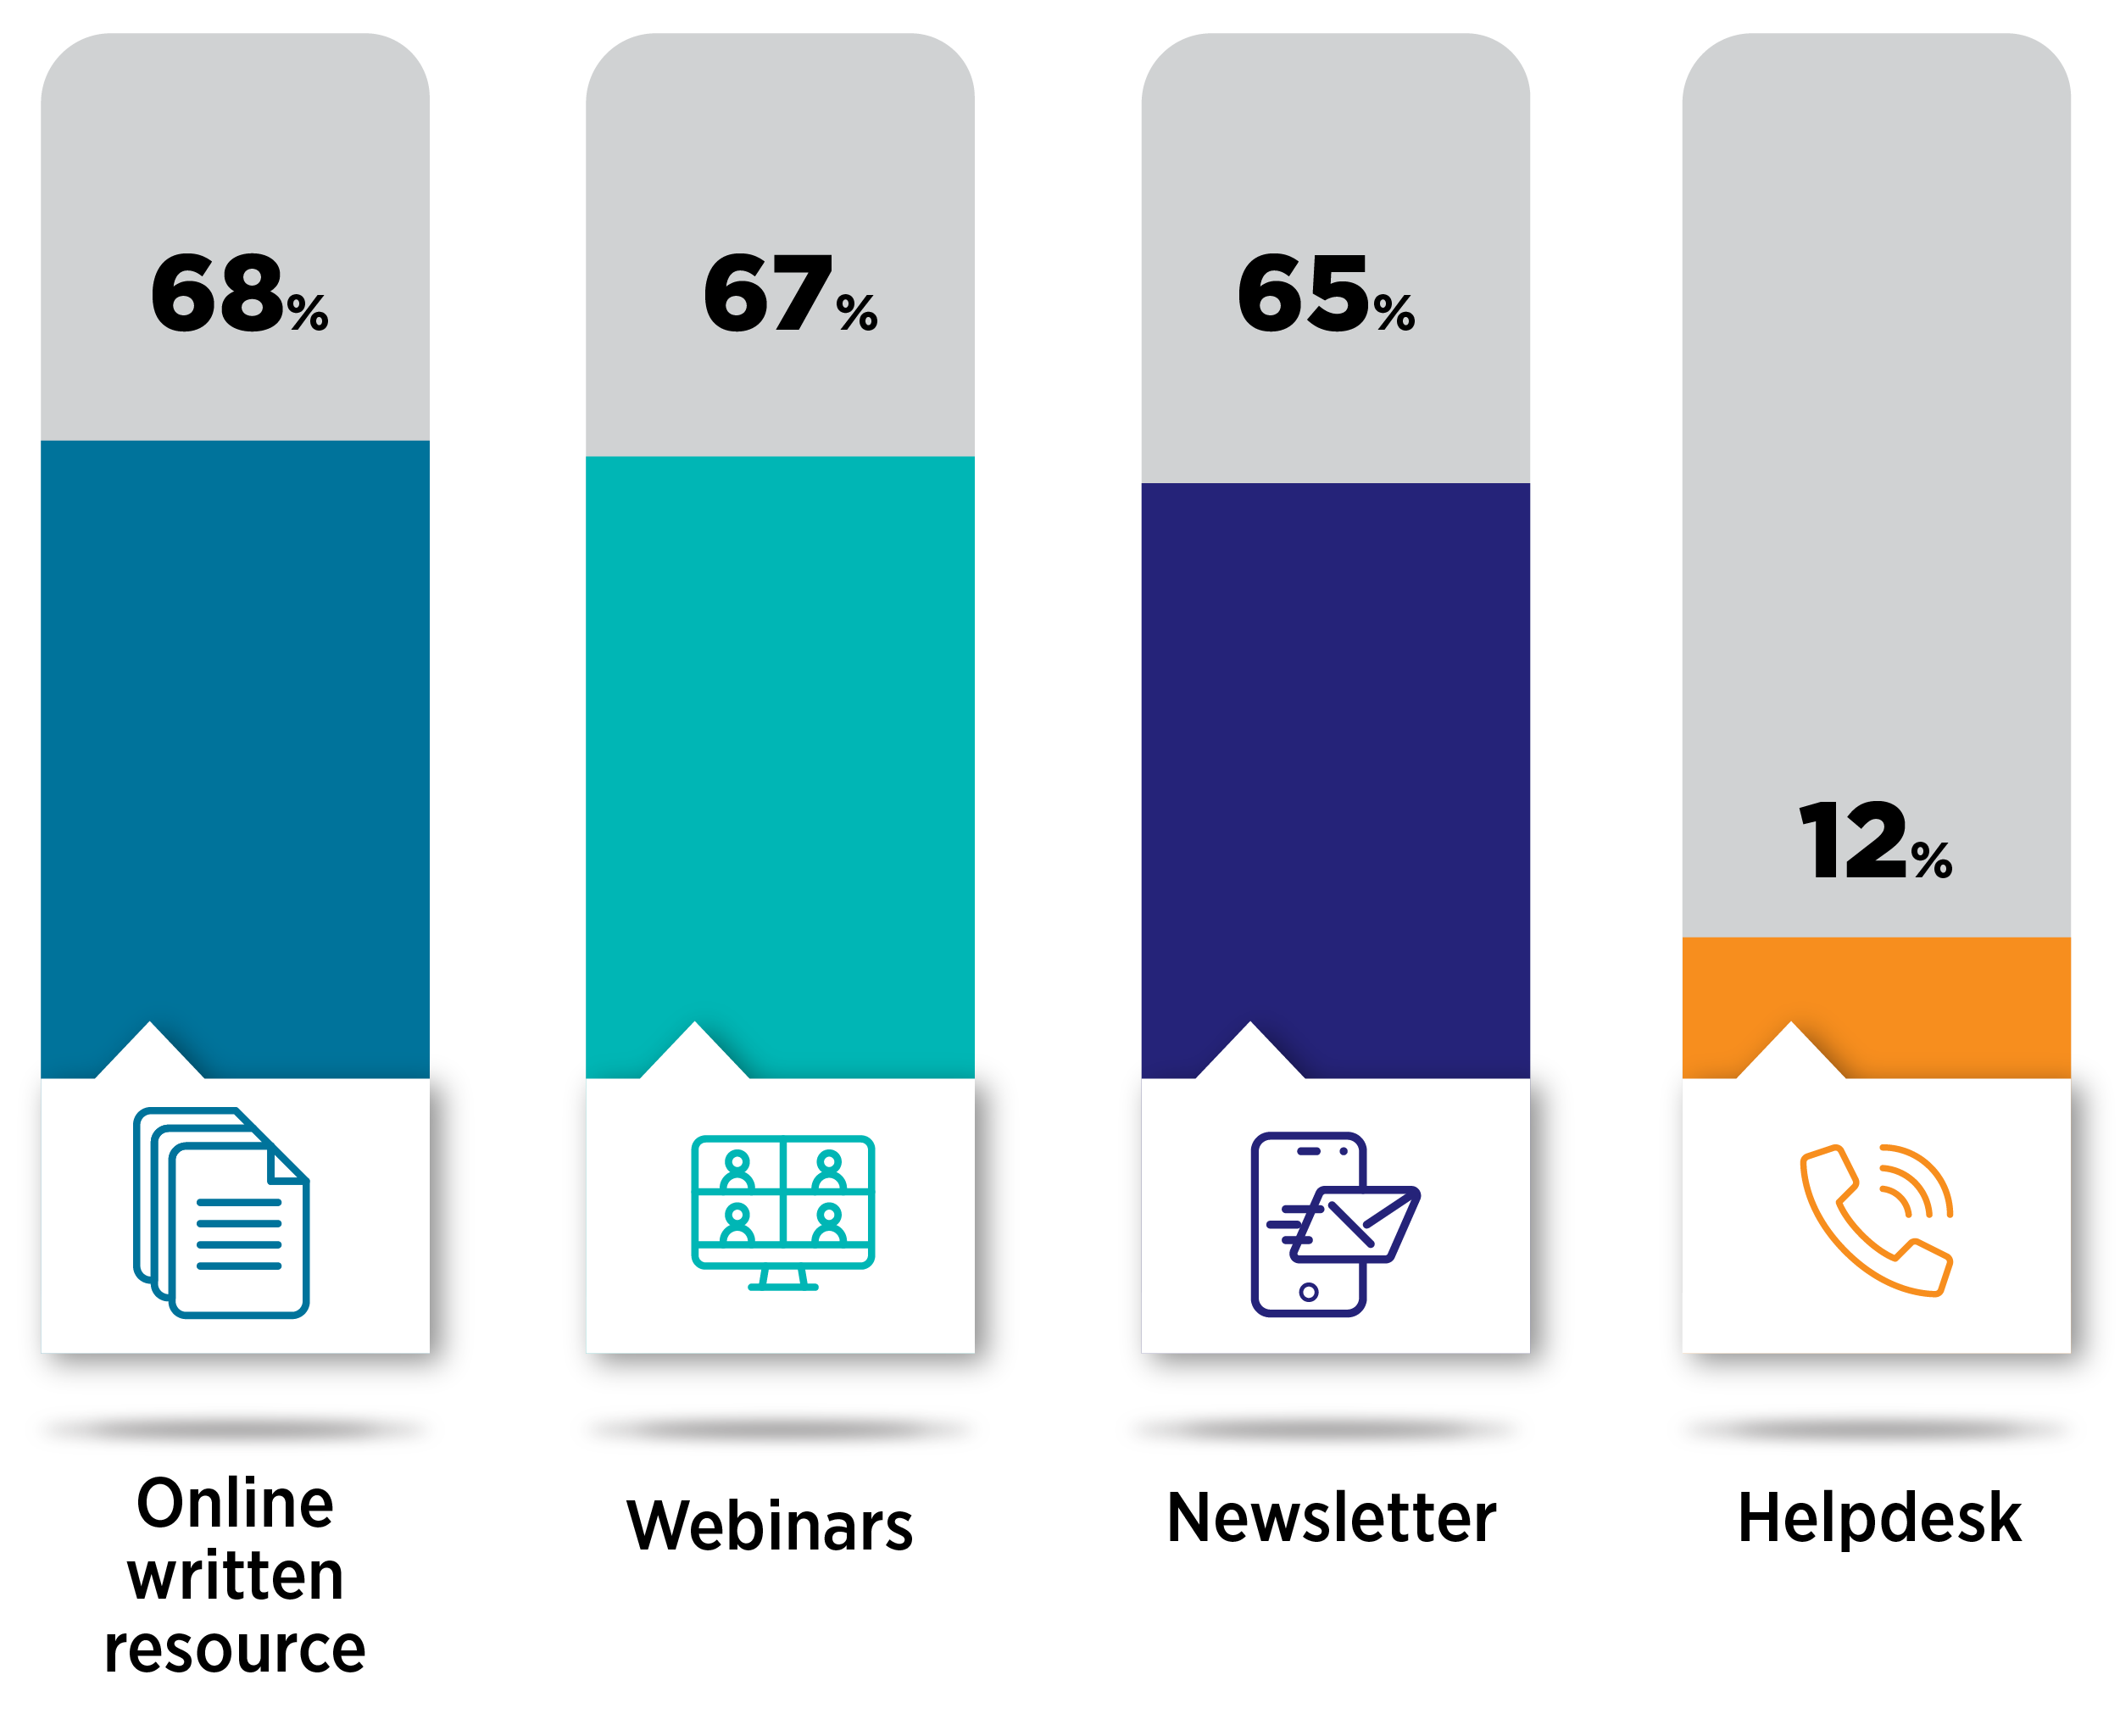 68% - Online written resource, 67% - Webinar, 65% - Newsletter, 12% Helpdesk